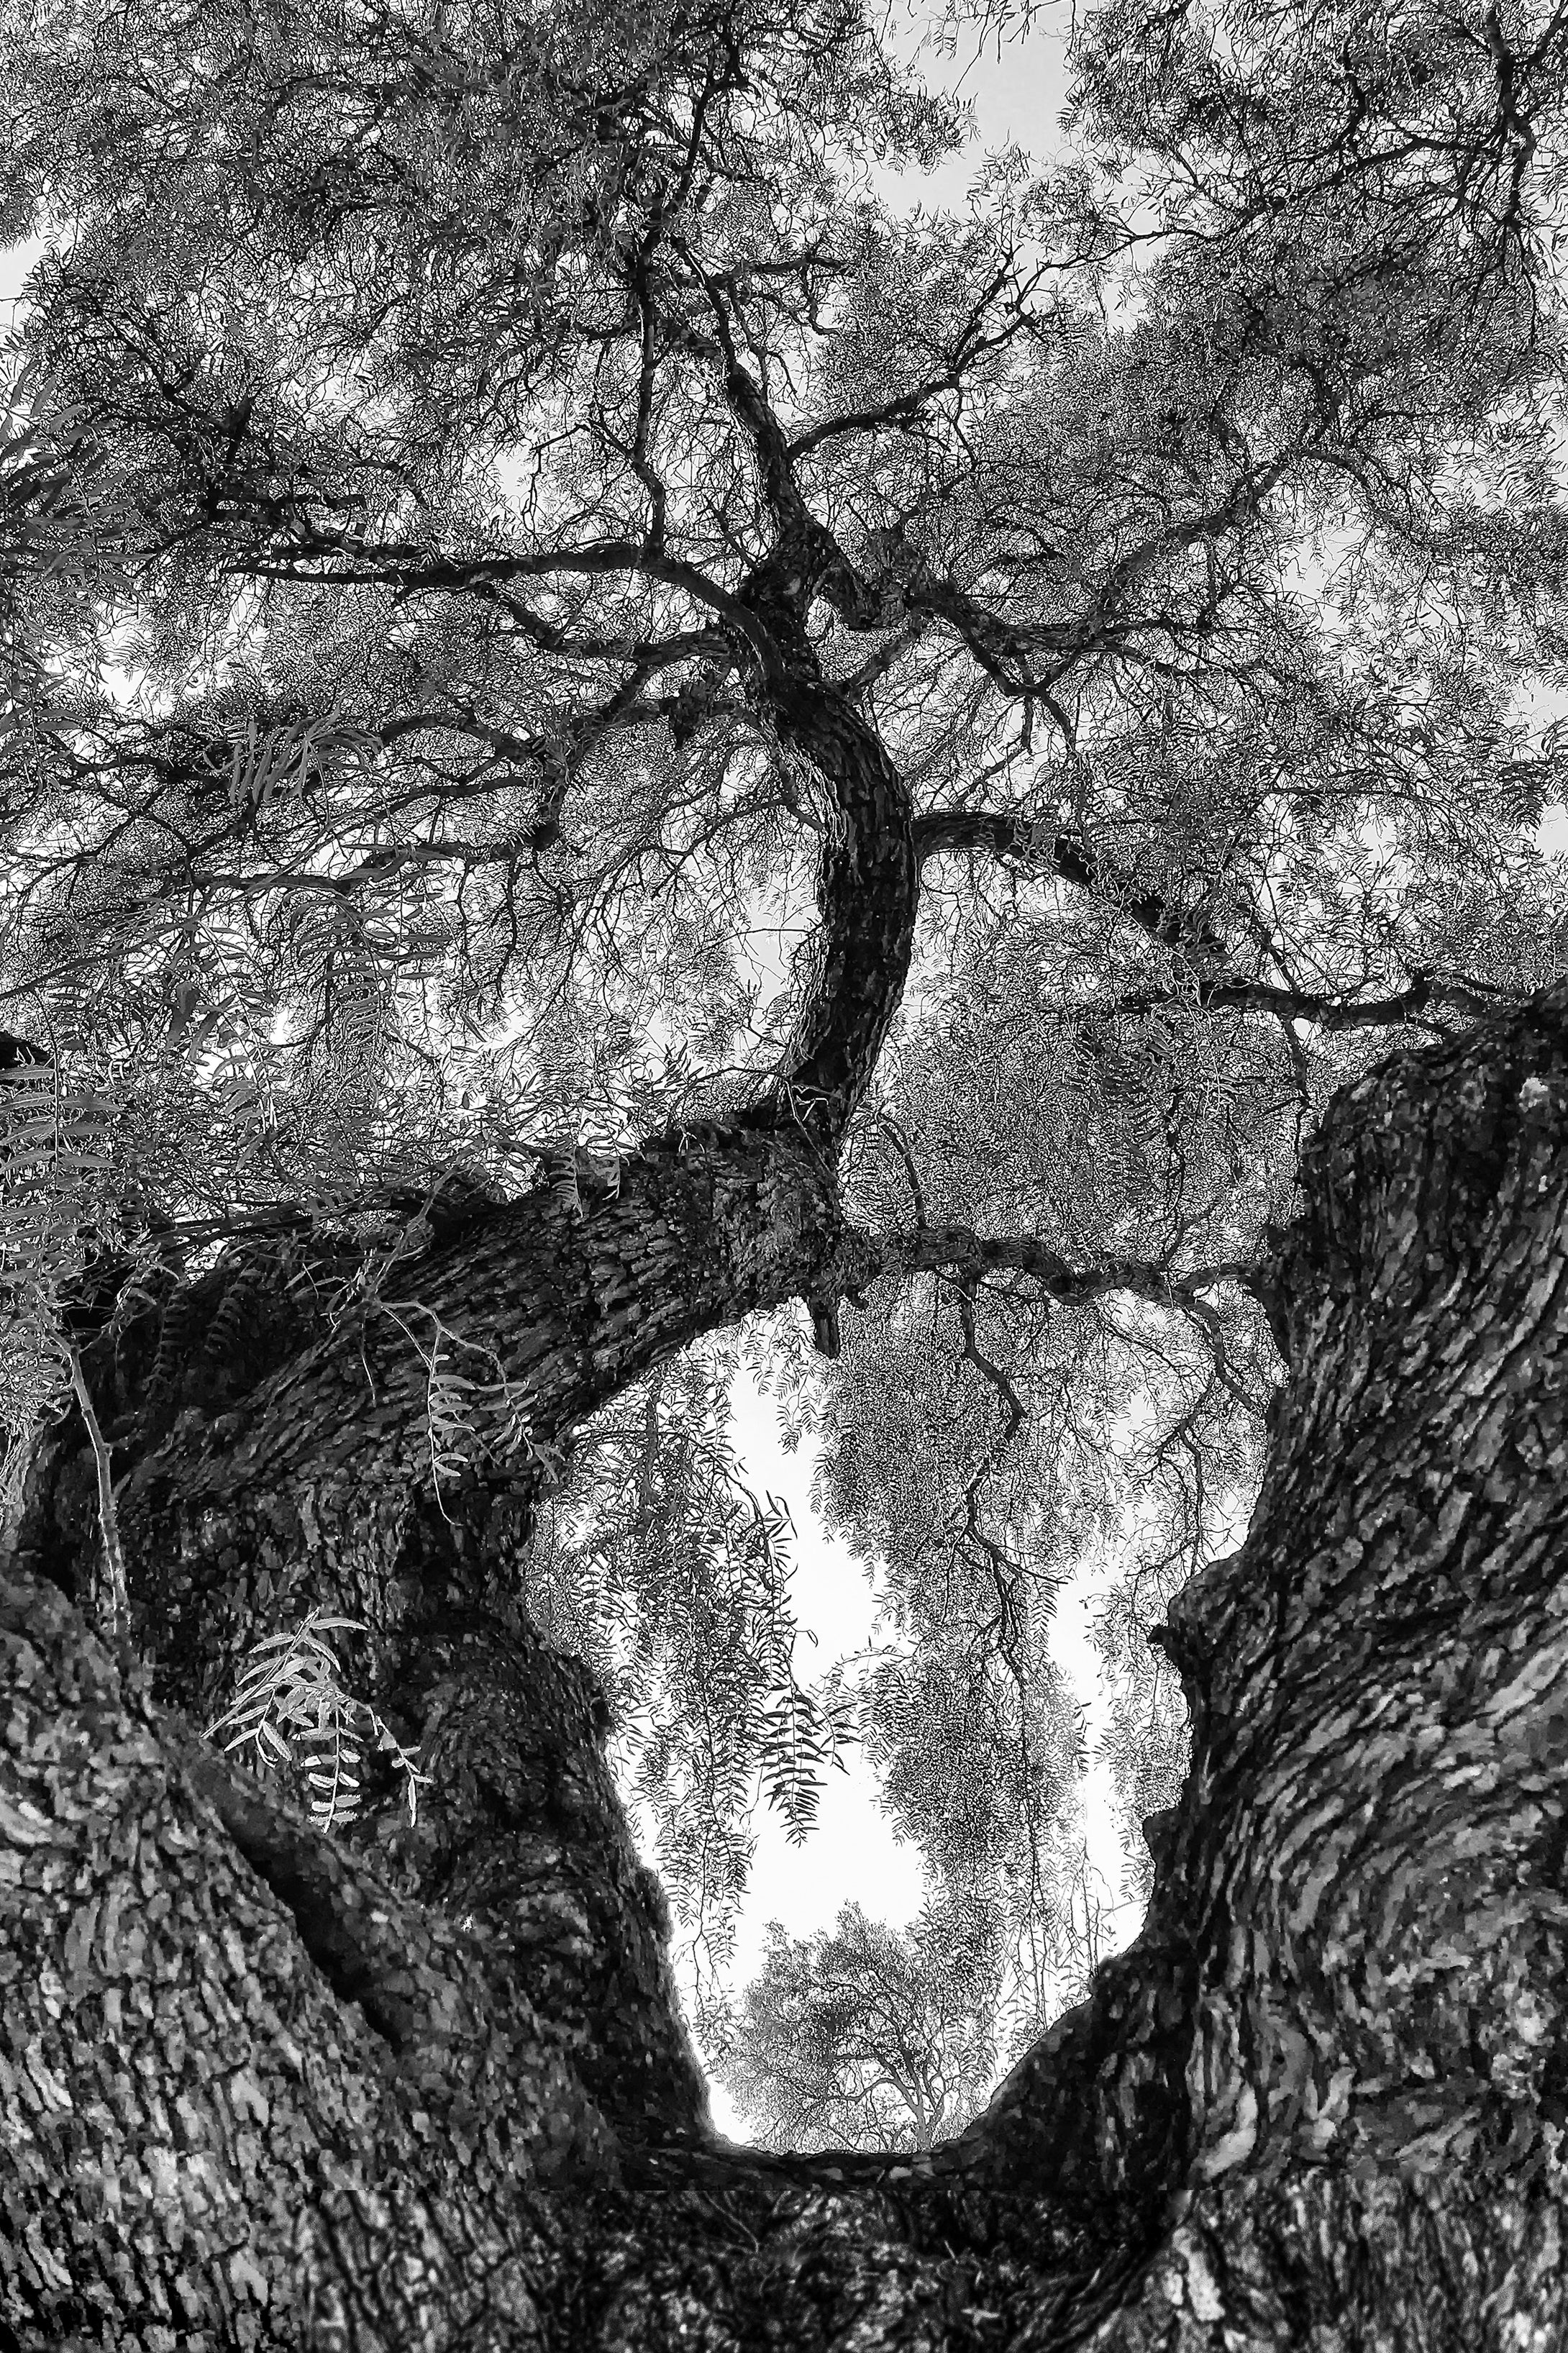 Transitions: Ron Rothbart: More Than Tree